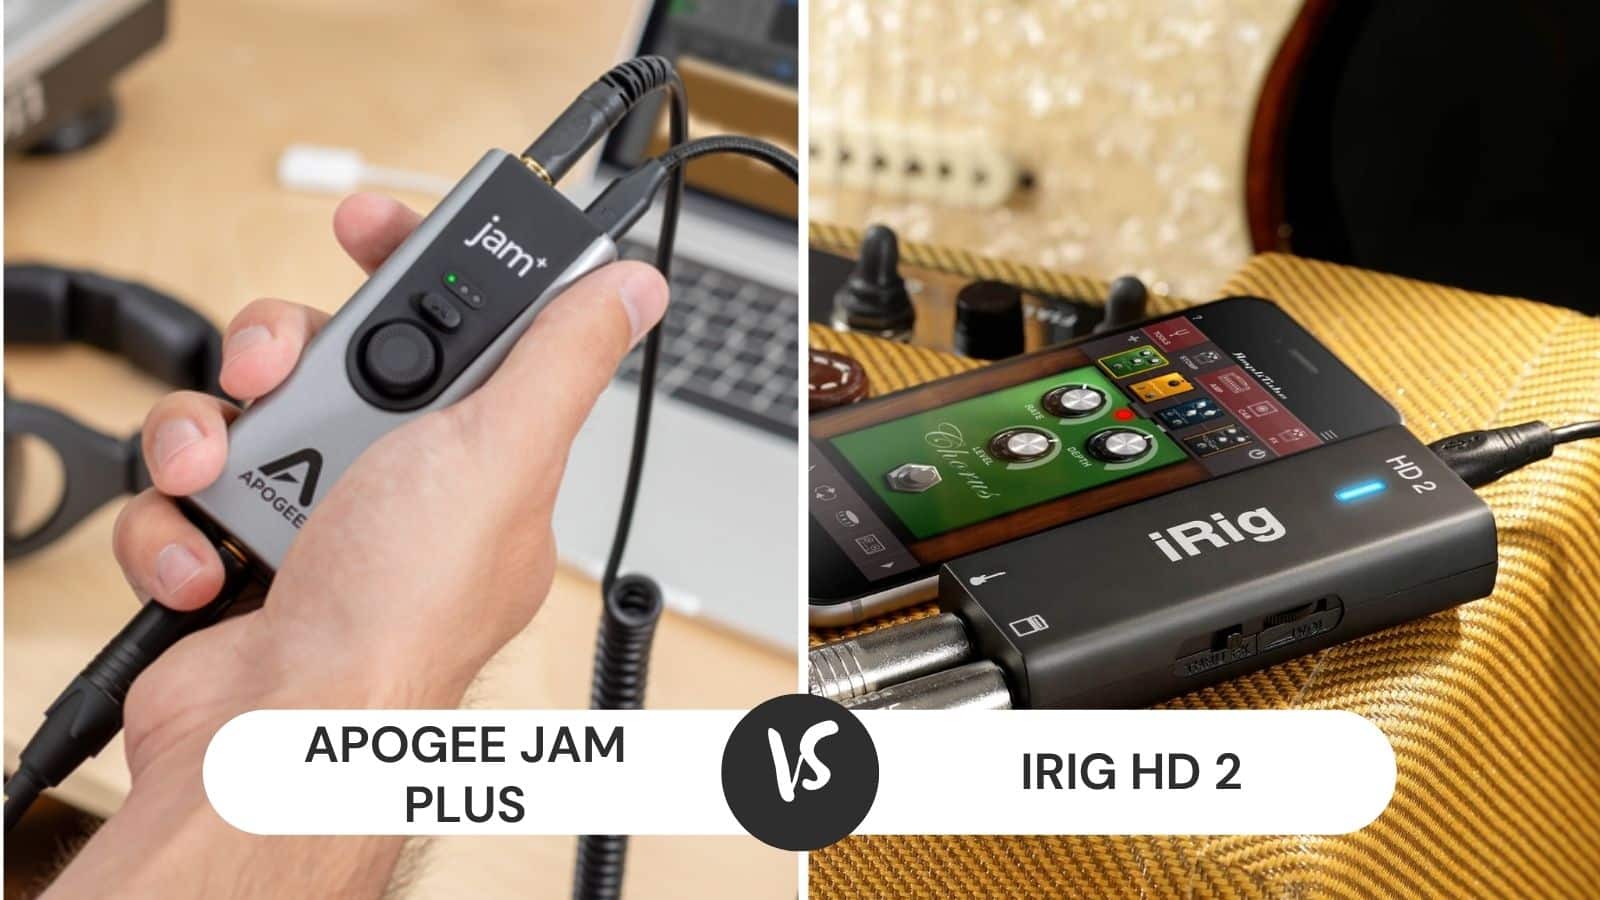 Apogee Jam Plus vs iRig HD 2